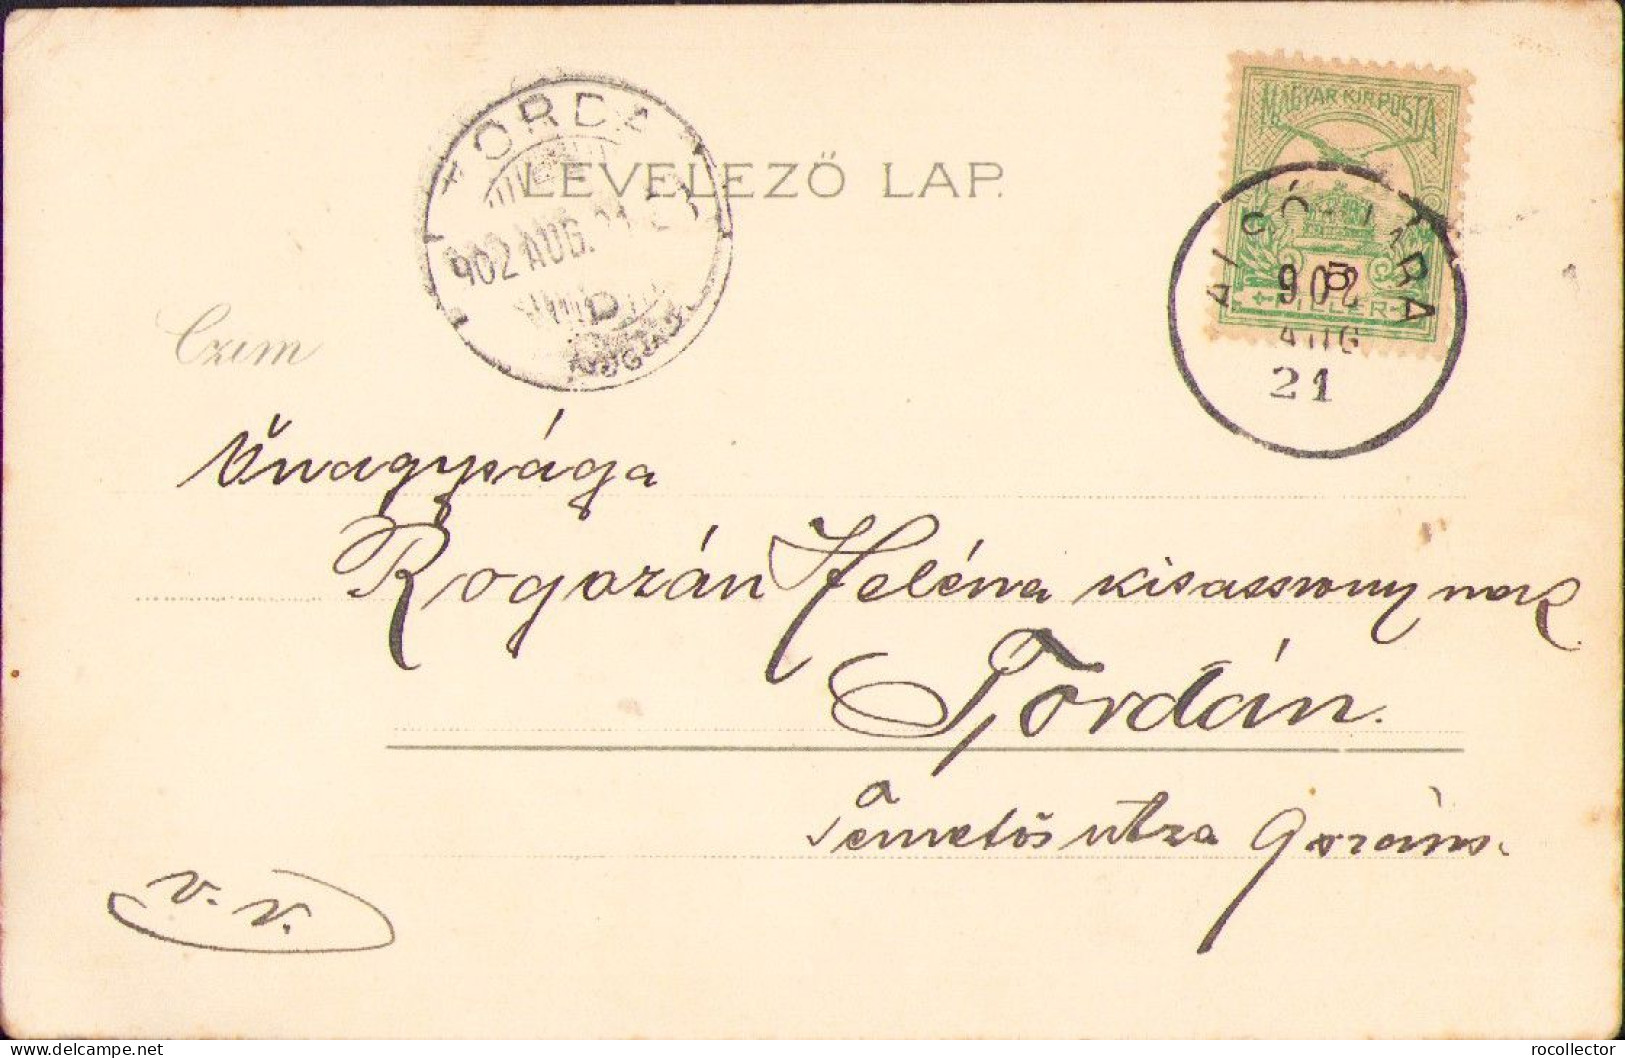 Genf Geneva Postcard Circulated Alsó-Jára Torda CP524N - Hungary